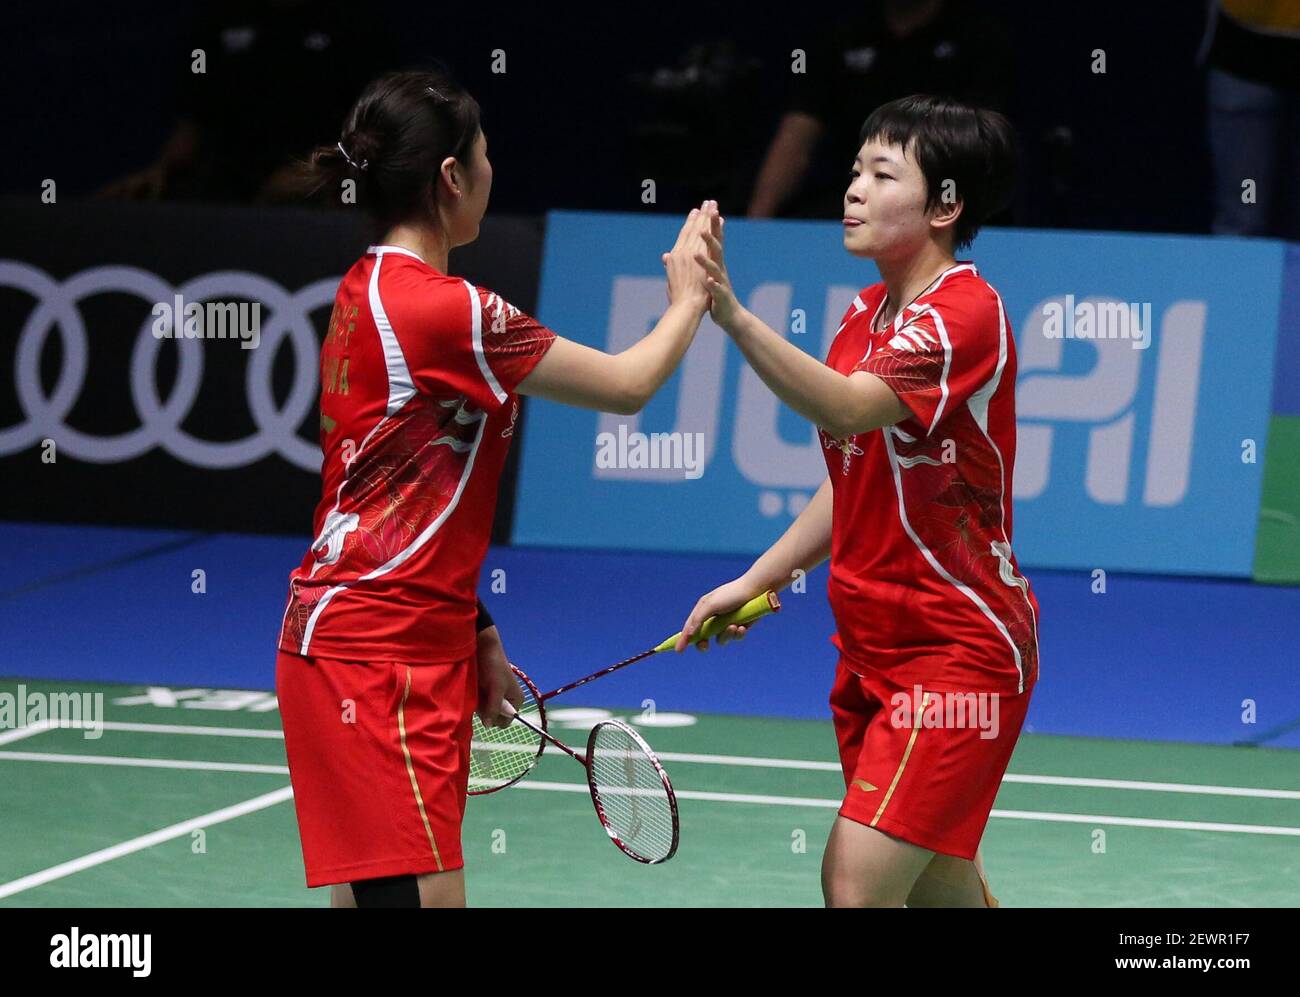 161218) -- DUBAI , Dec. 18, 2016 (Xinhua) -- Chen Qingchen(R) and Jia Yifan  of China celebrate during the women's doubles final against Misaki  Matsutomo and Ayaka Takahashi of Japan in the